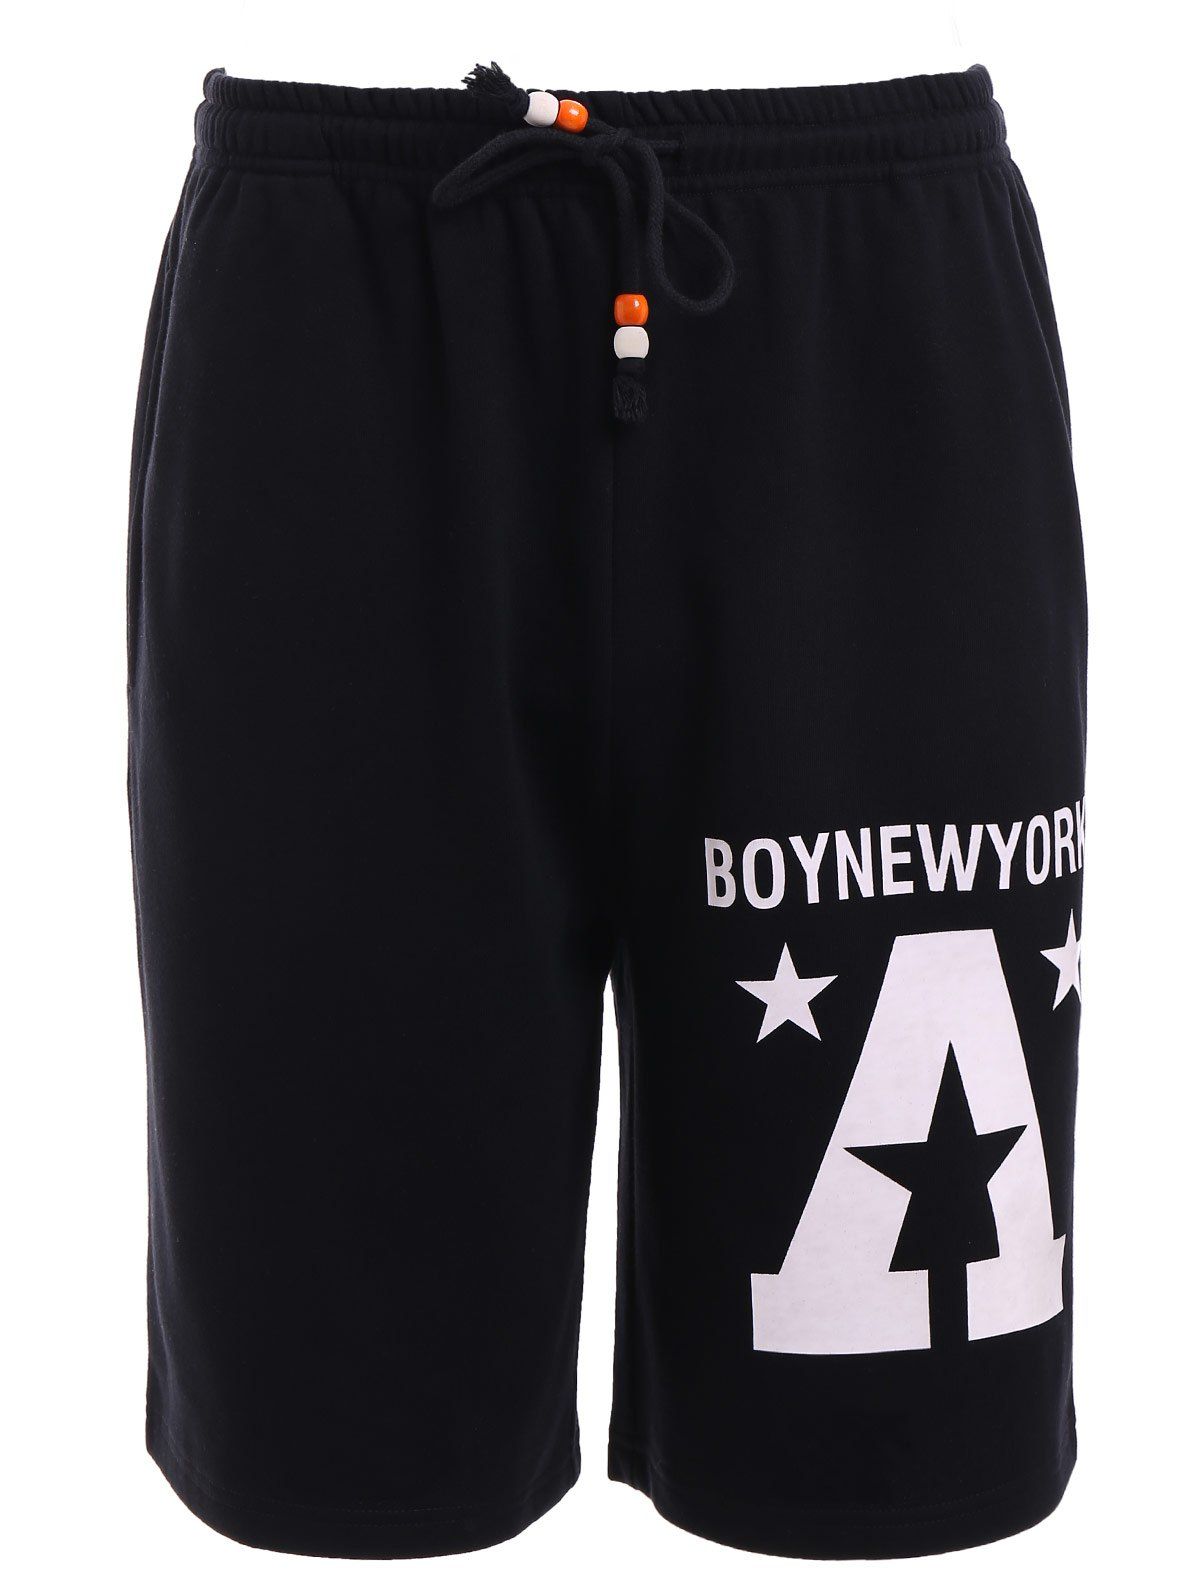 BoyNewYork Letters Star Pattern Shorts